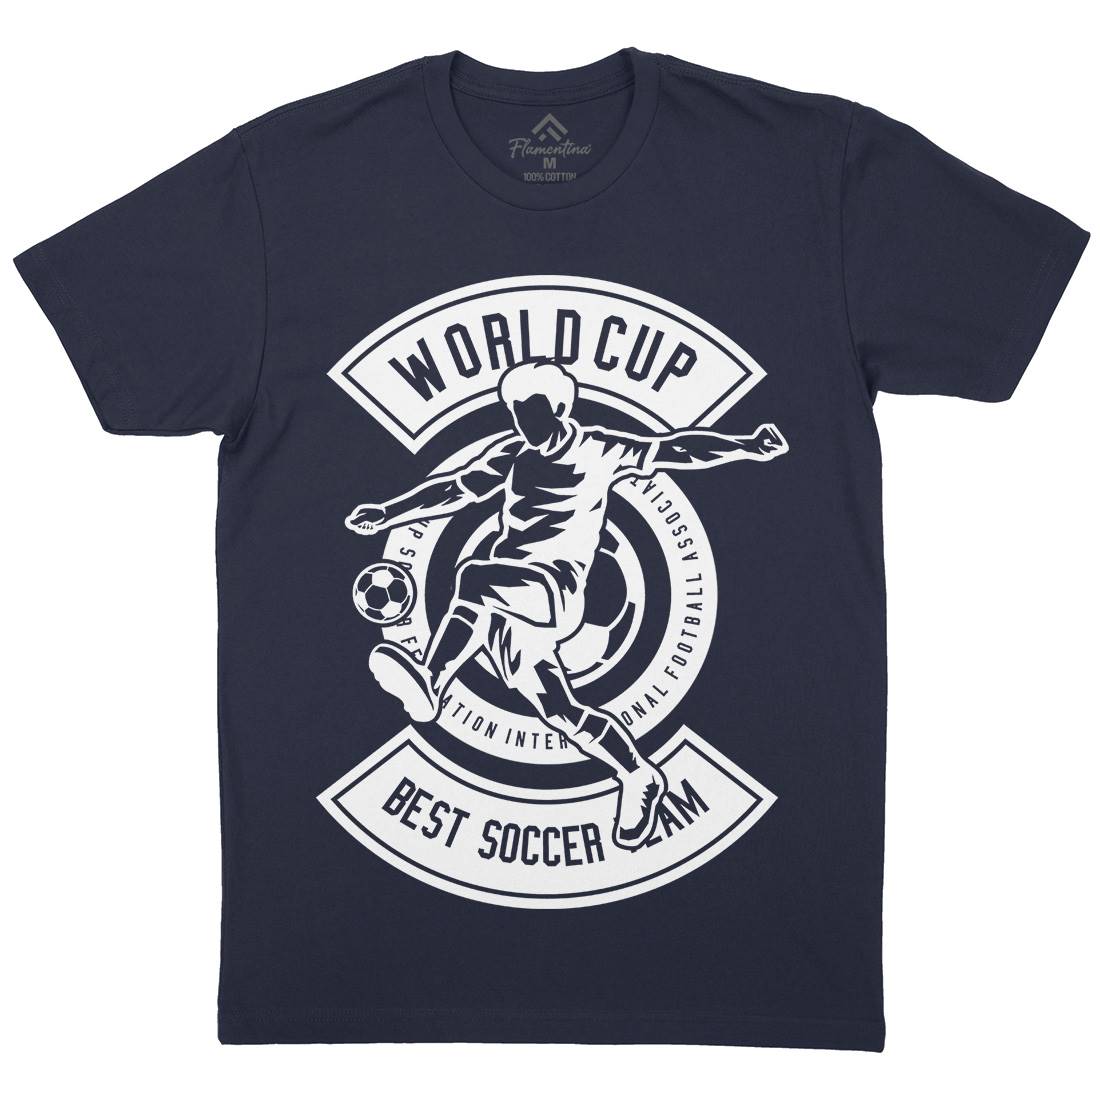 World Cup Soccer Mens Organic Crew Neck T-Shirt Sport B675